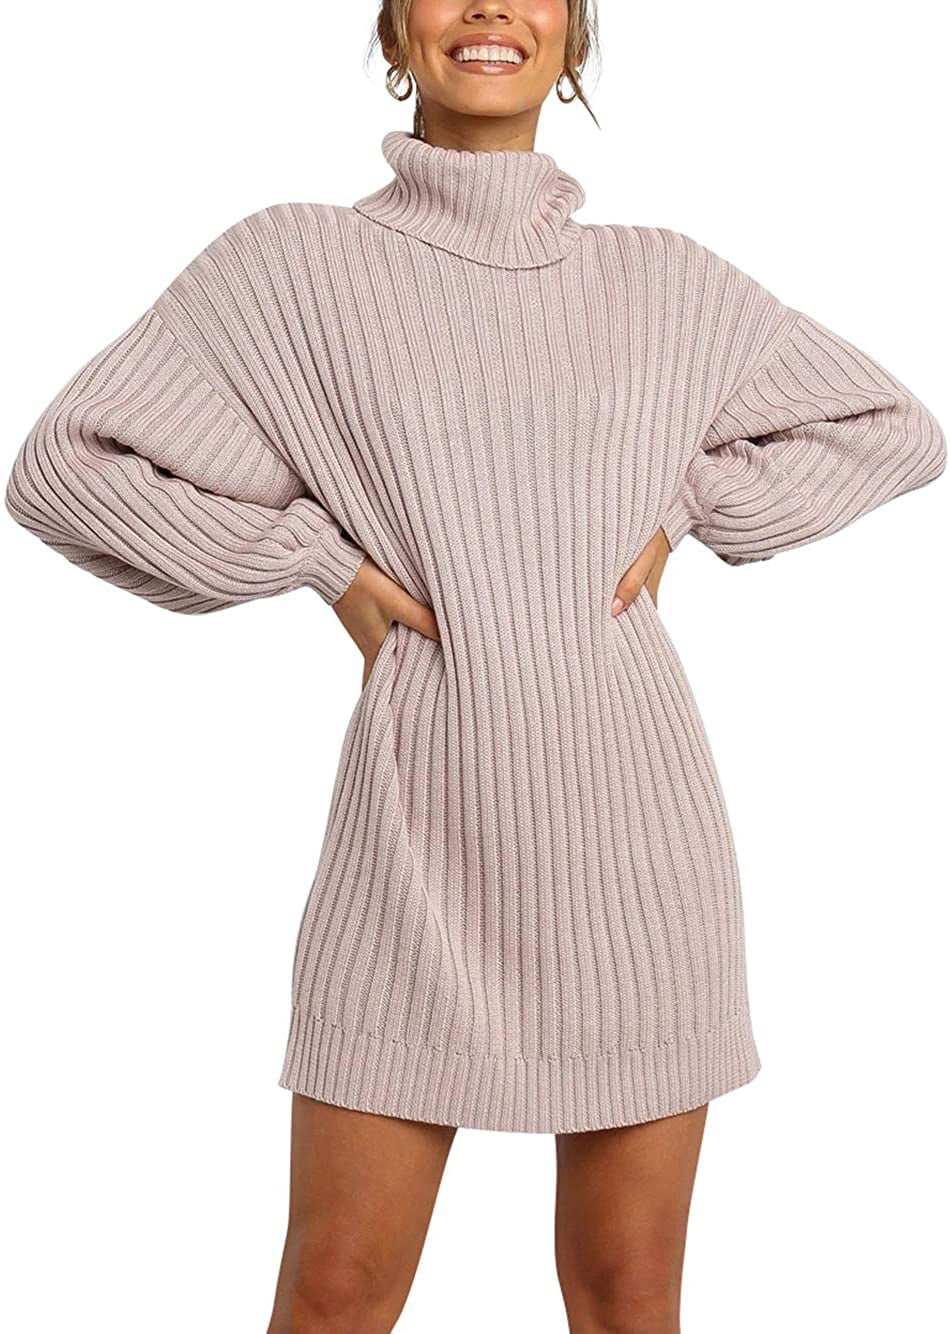 oversized cute oversized sweater dress